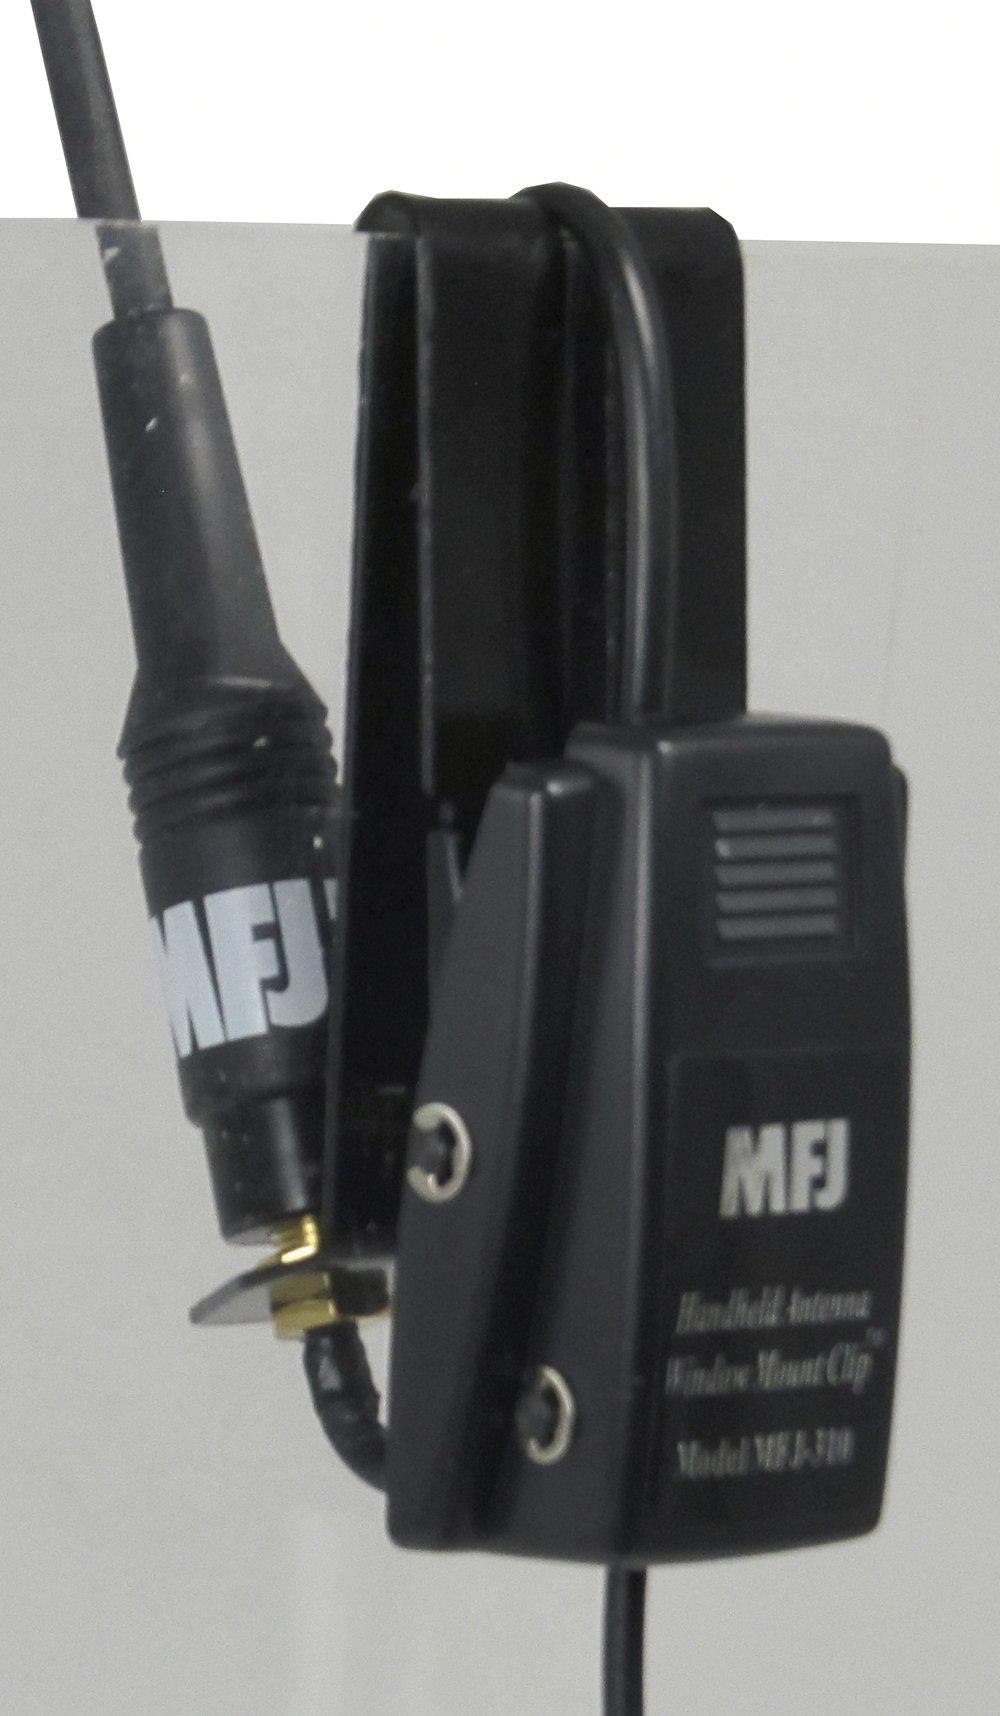 MFJ-310S Clip Mount for SMA Antenna for edge of car window